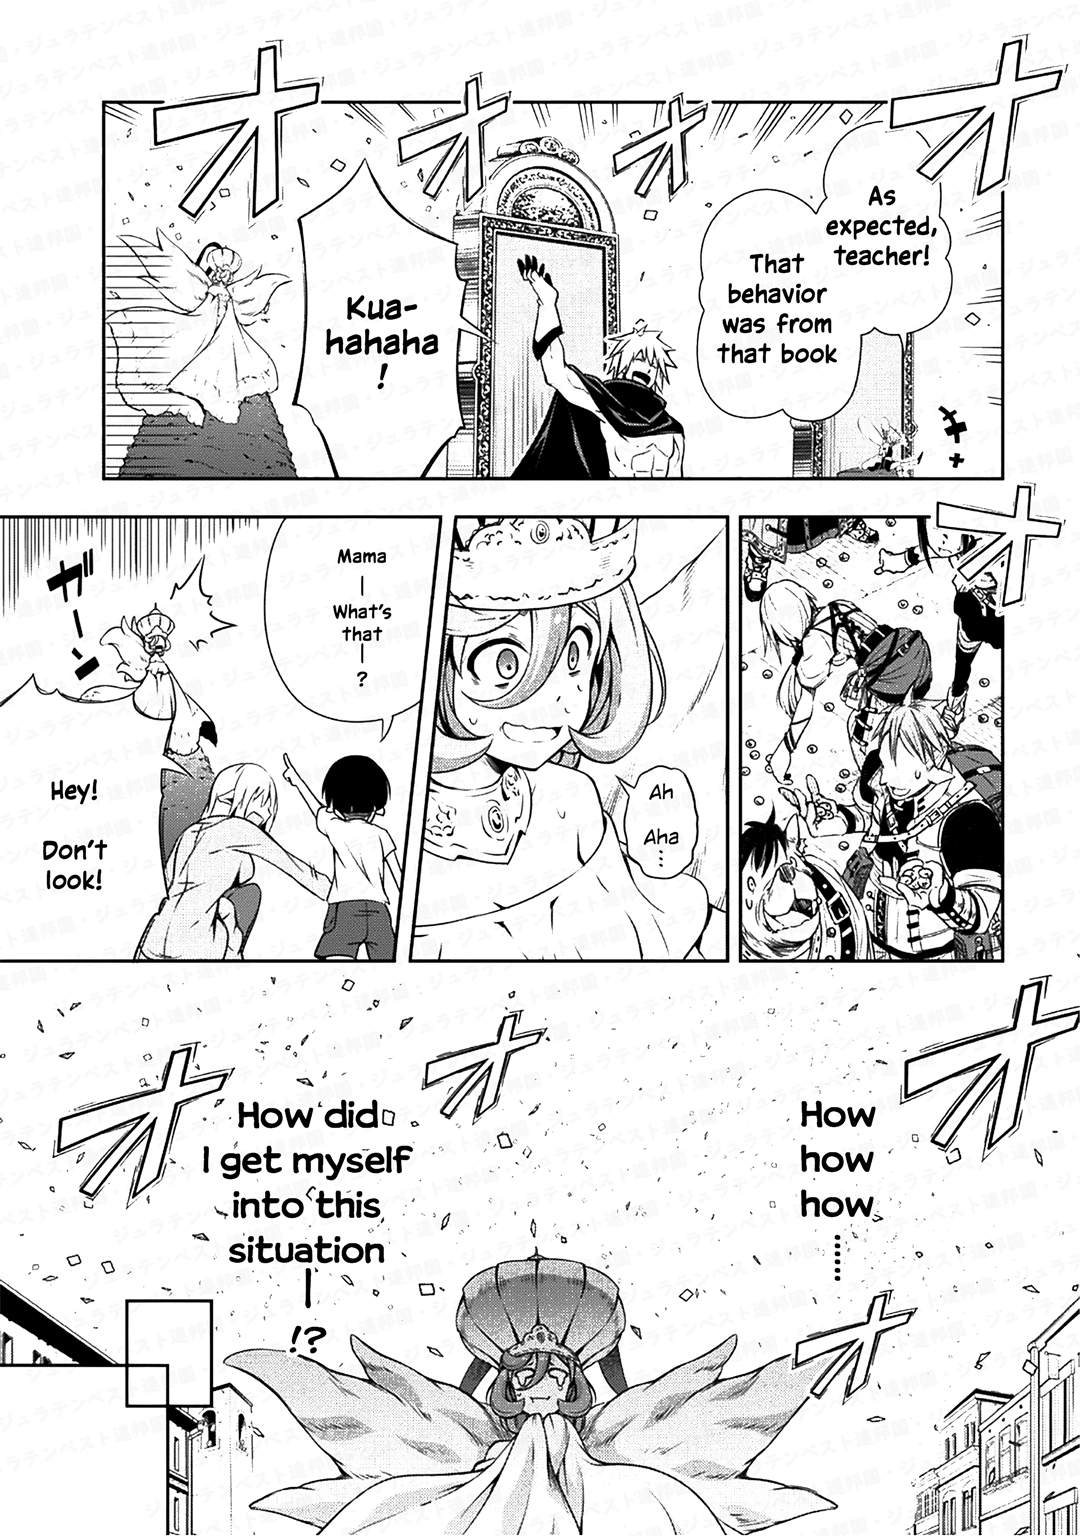 Tensei Shitara Slime Datta Ken: Mamono no Kuni no Arukikata Vol. 5 Ch. 26 A Noble Mind ☆ 3 Stars!!